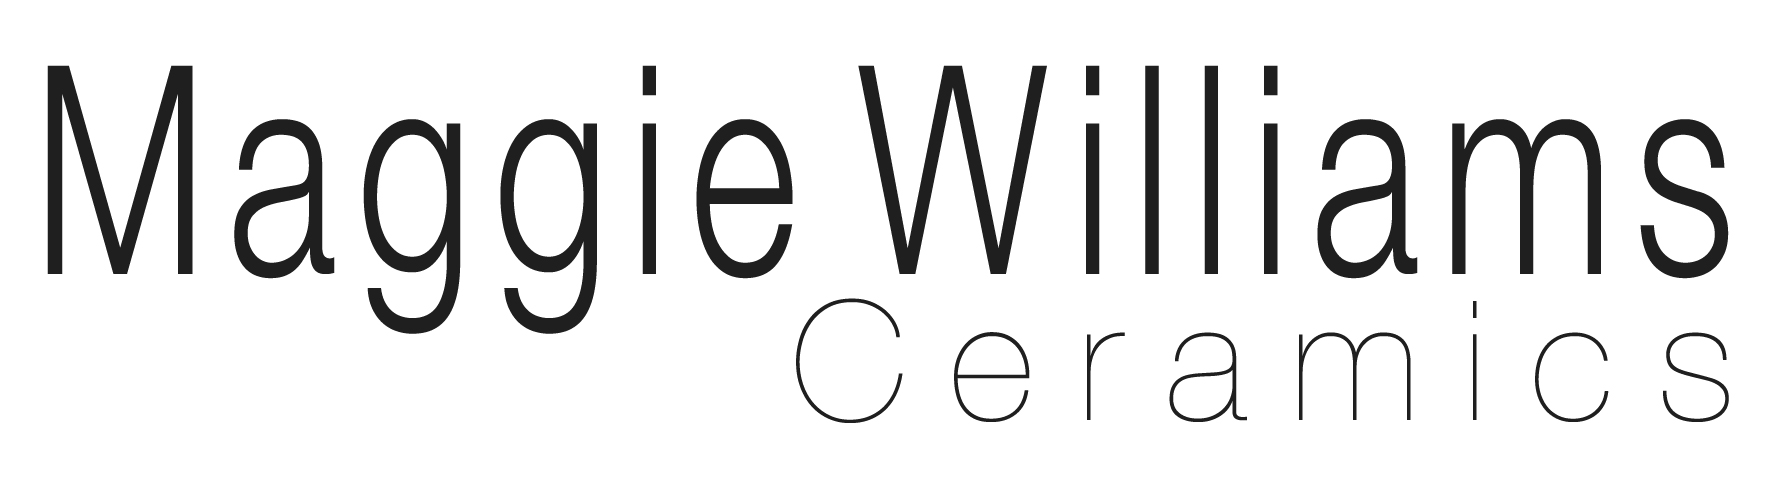 mw-logo-3web